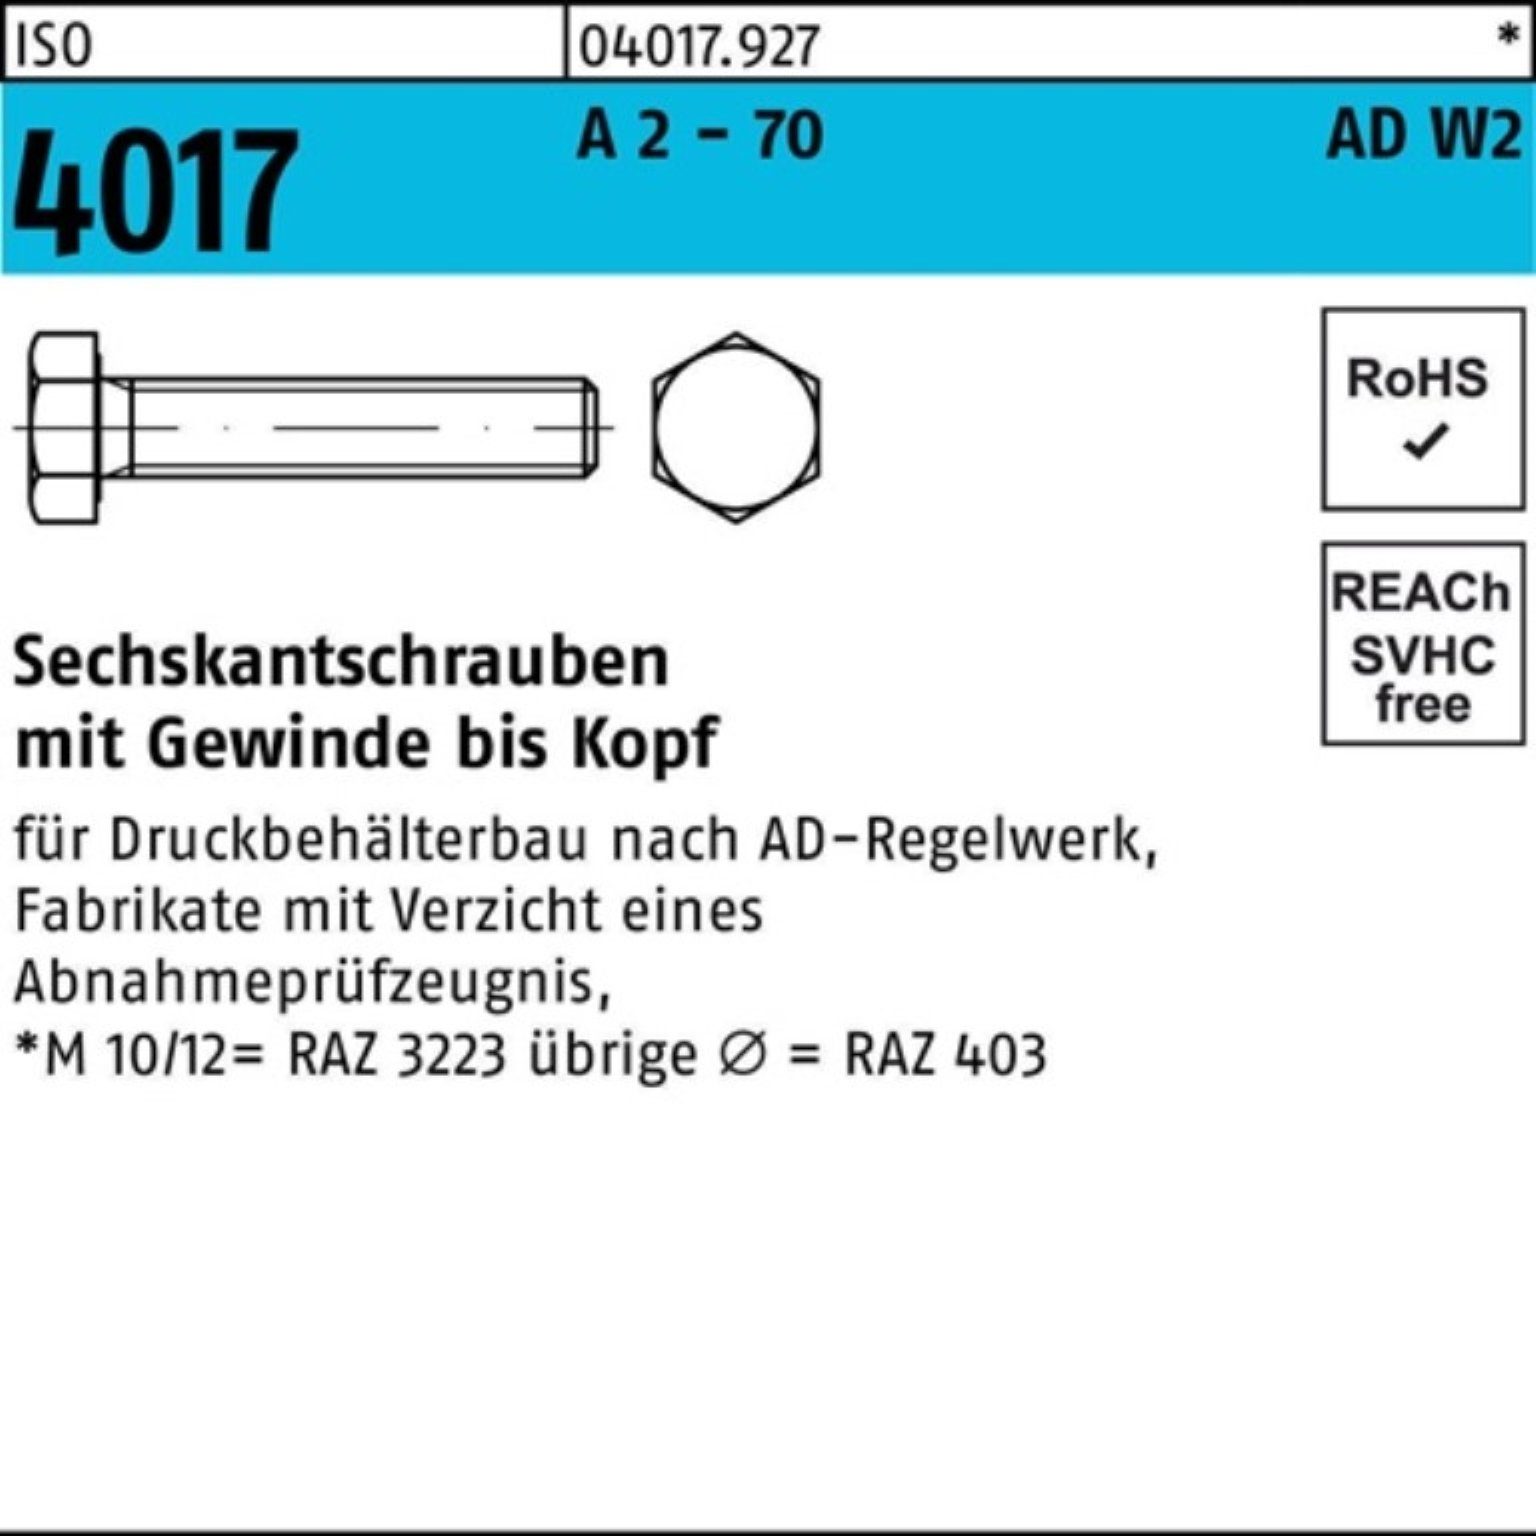 AD-W2 25 VG Sechskantschraube 35 Sechskantschraube ISO 4017 M16x 70 Bufab - Pack A St 2 100er